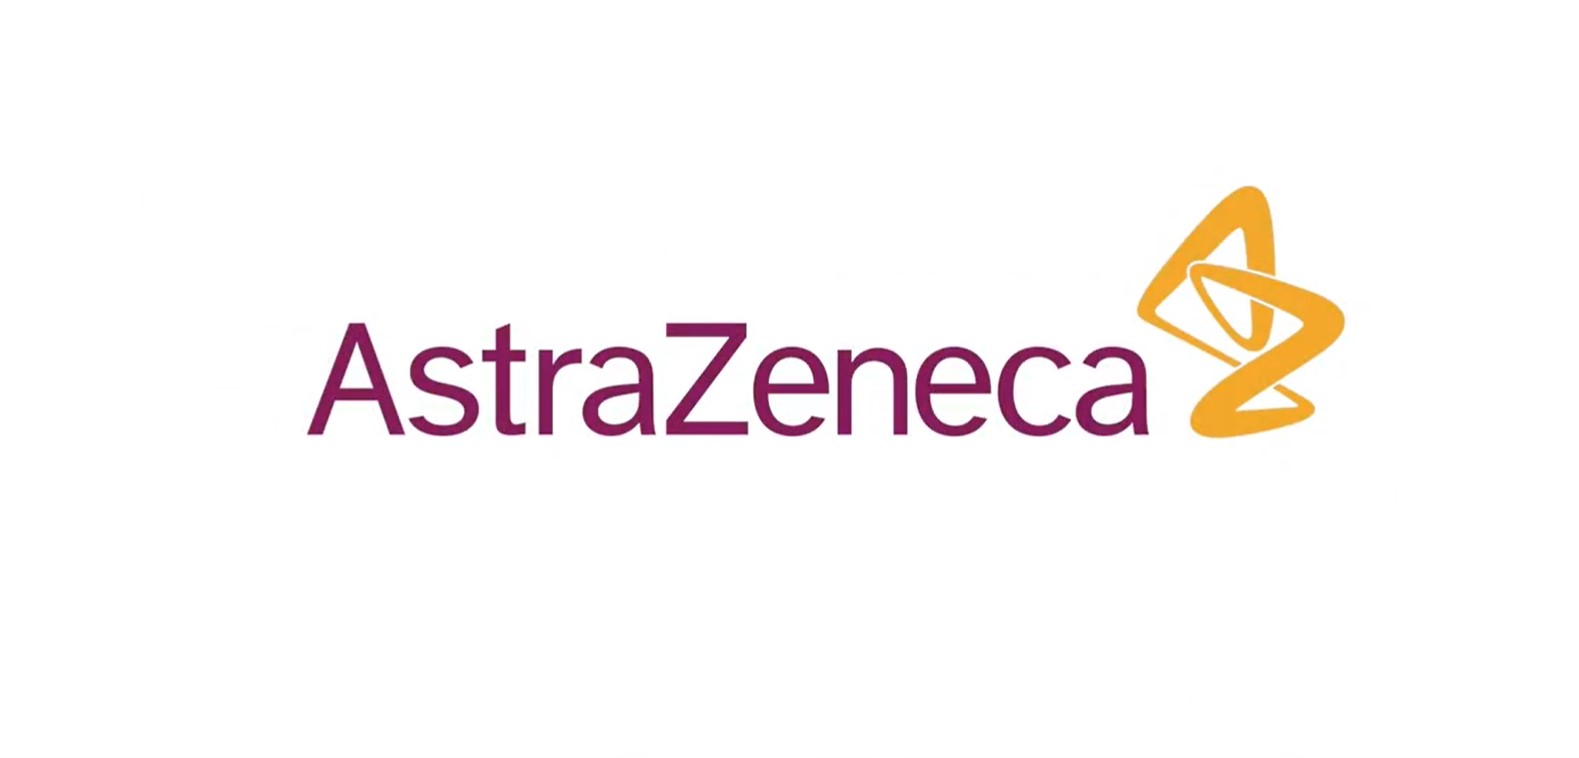 AstraZeneca chief says company hopes to catch up, meet EU's Q2 COVID-19 vaccine supply targets